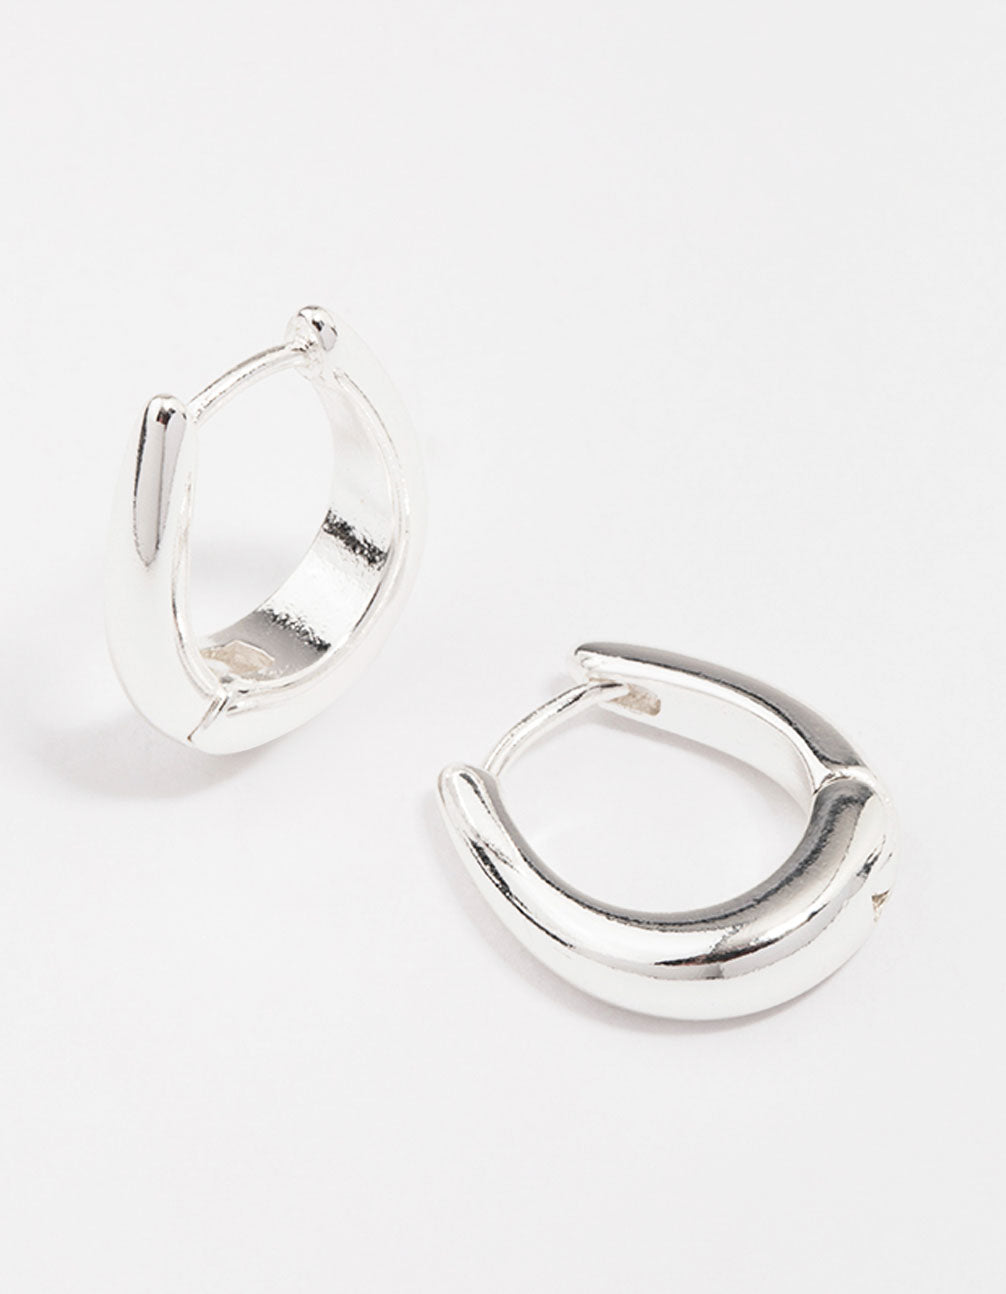 925 Sterling Silver Hoop Earrings | Mens Earrings - Twistedpendant